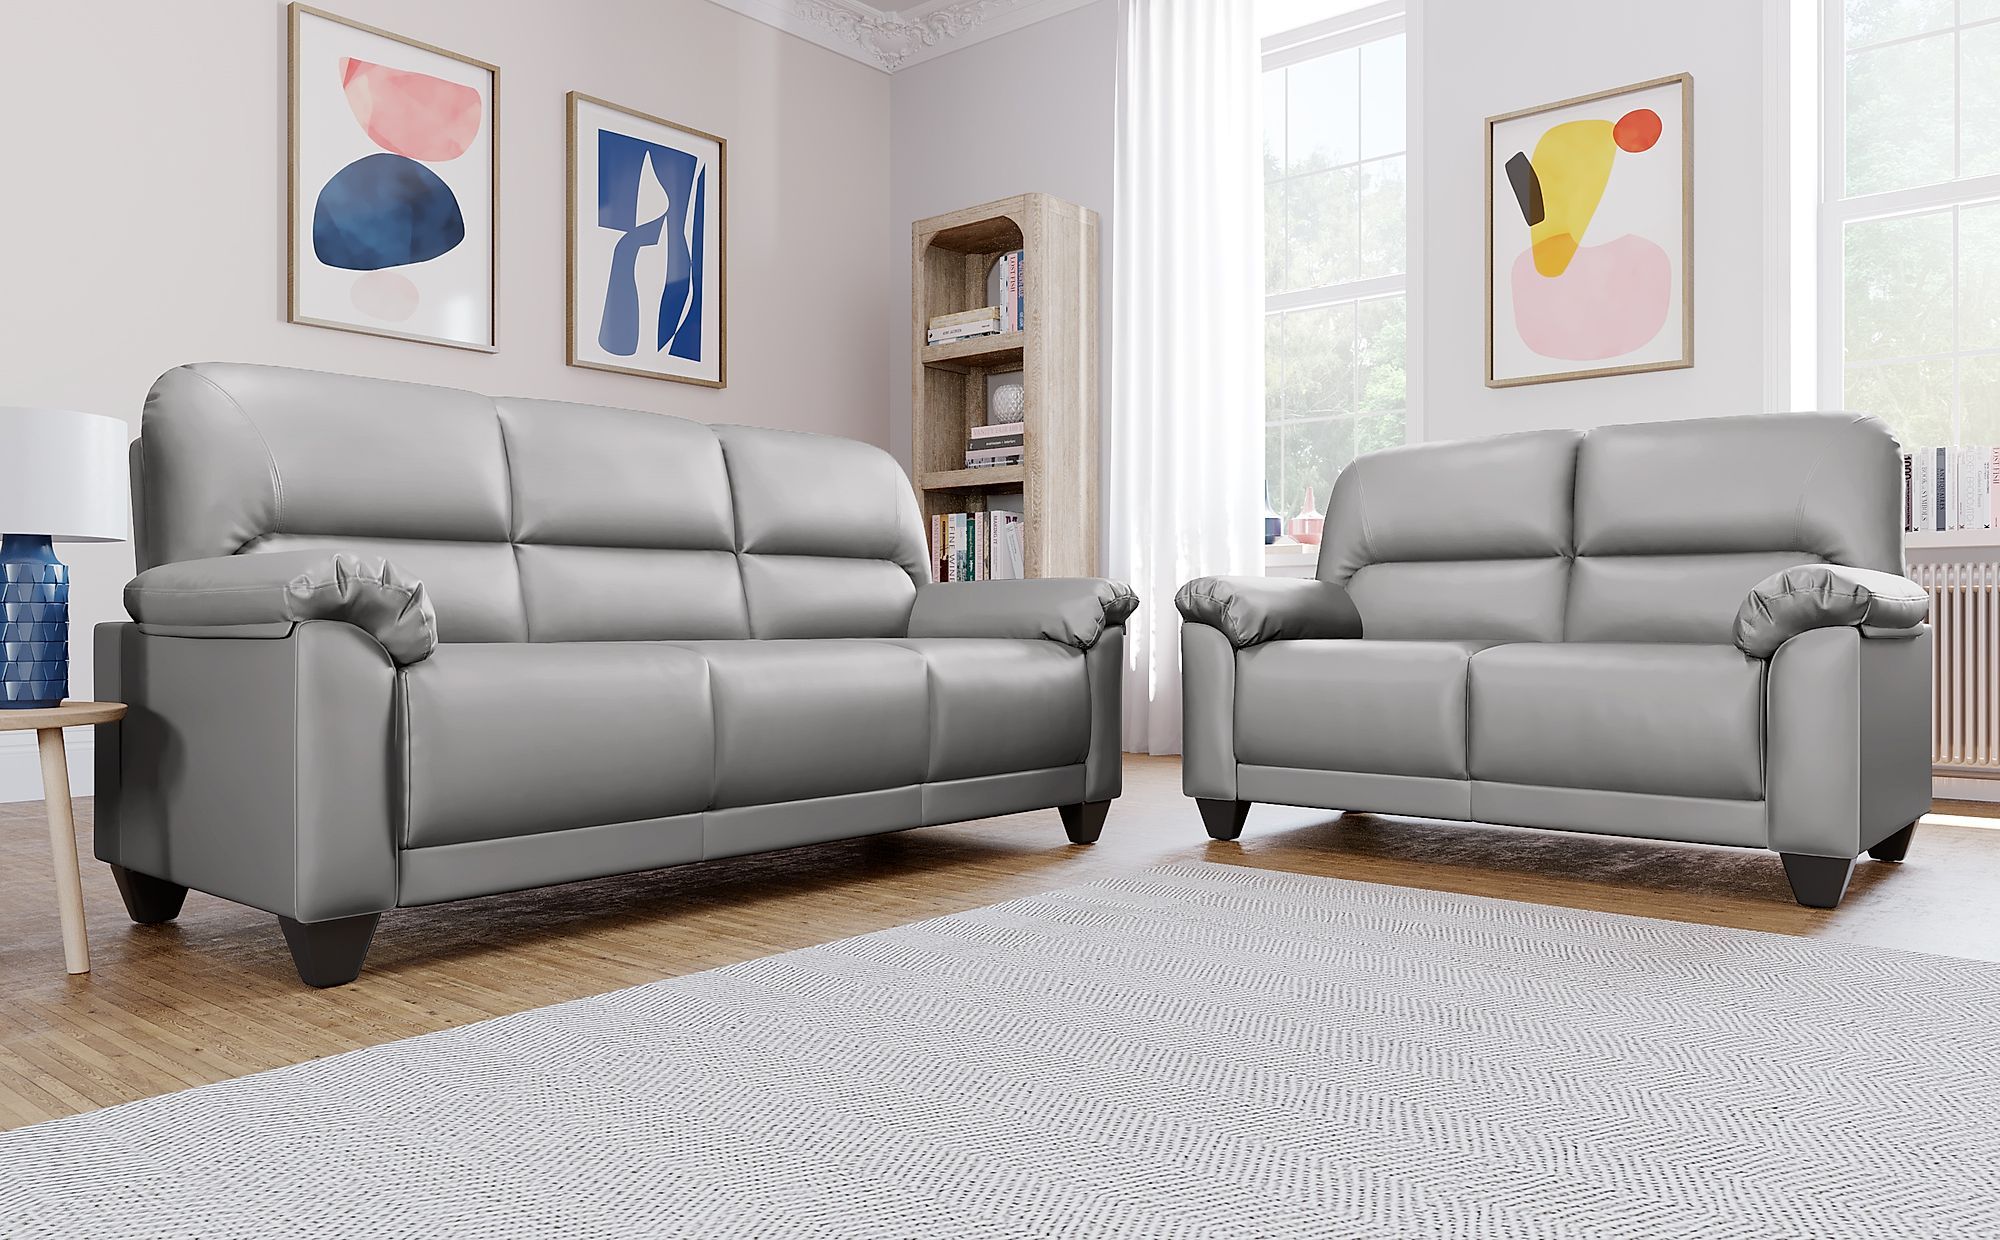 Kenton Small Light Grey Leather 3+2 Seater Sofa Set | Furniture Choice Throughout Sofas In Light Gray (View 22 of 22)